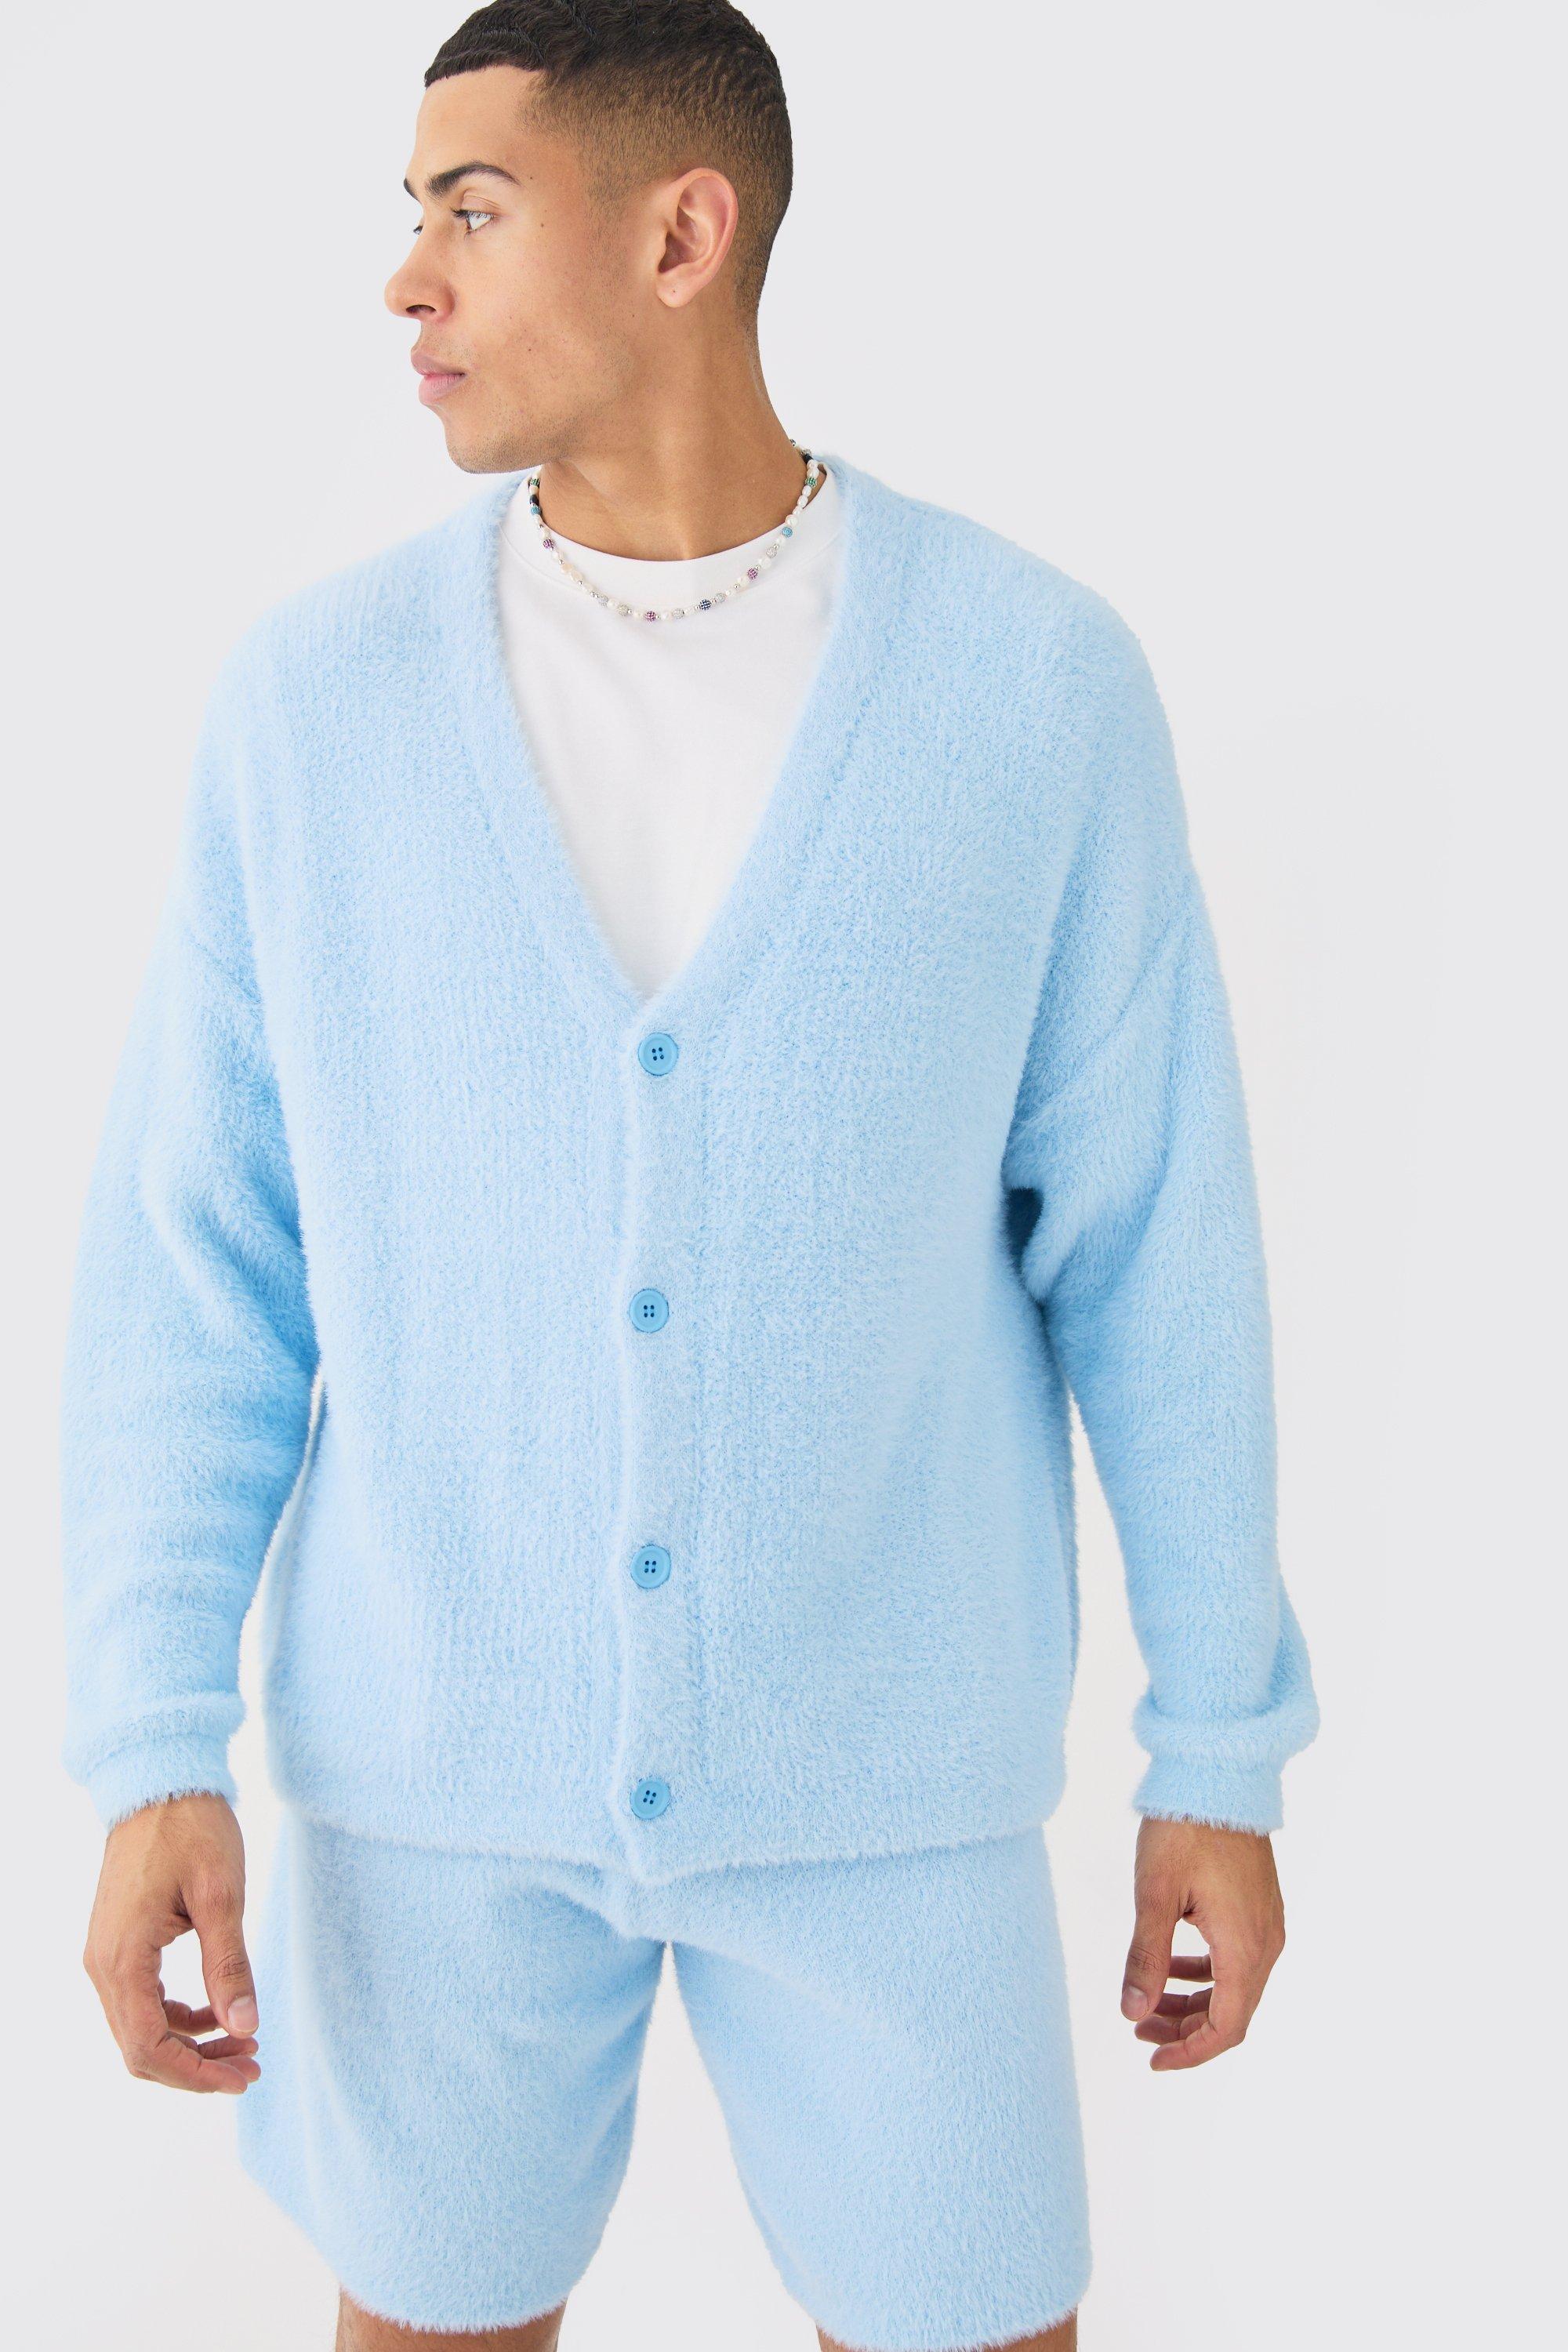 womens fluffy knit cardigan in light blue - m, blue